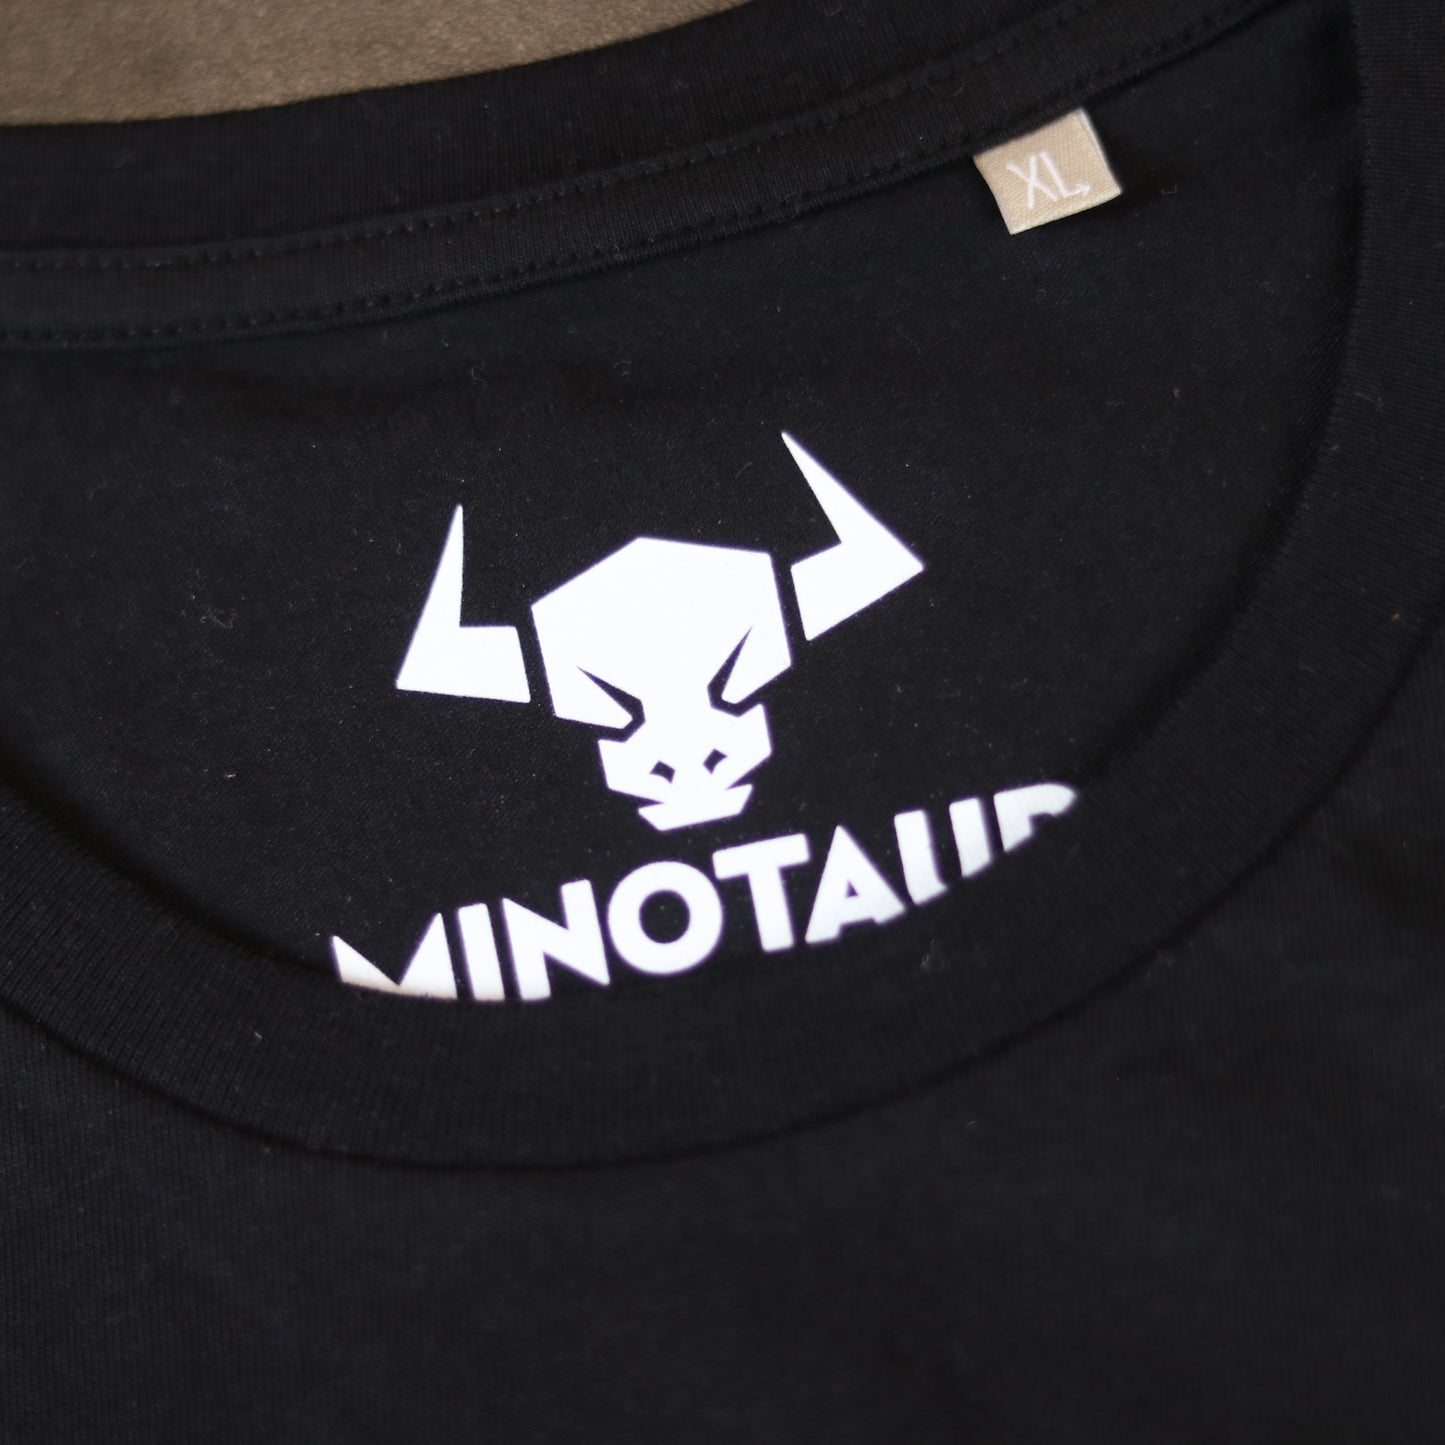 T-shirt brodé Minotaur noir